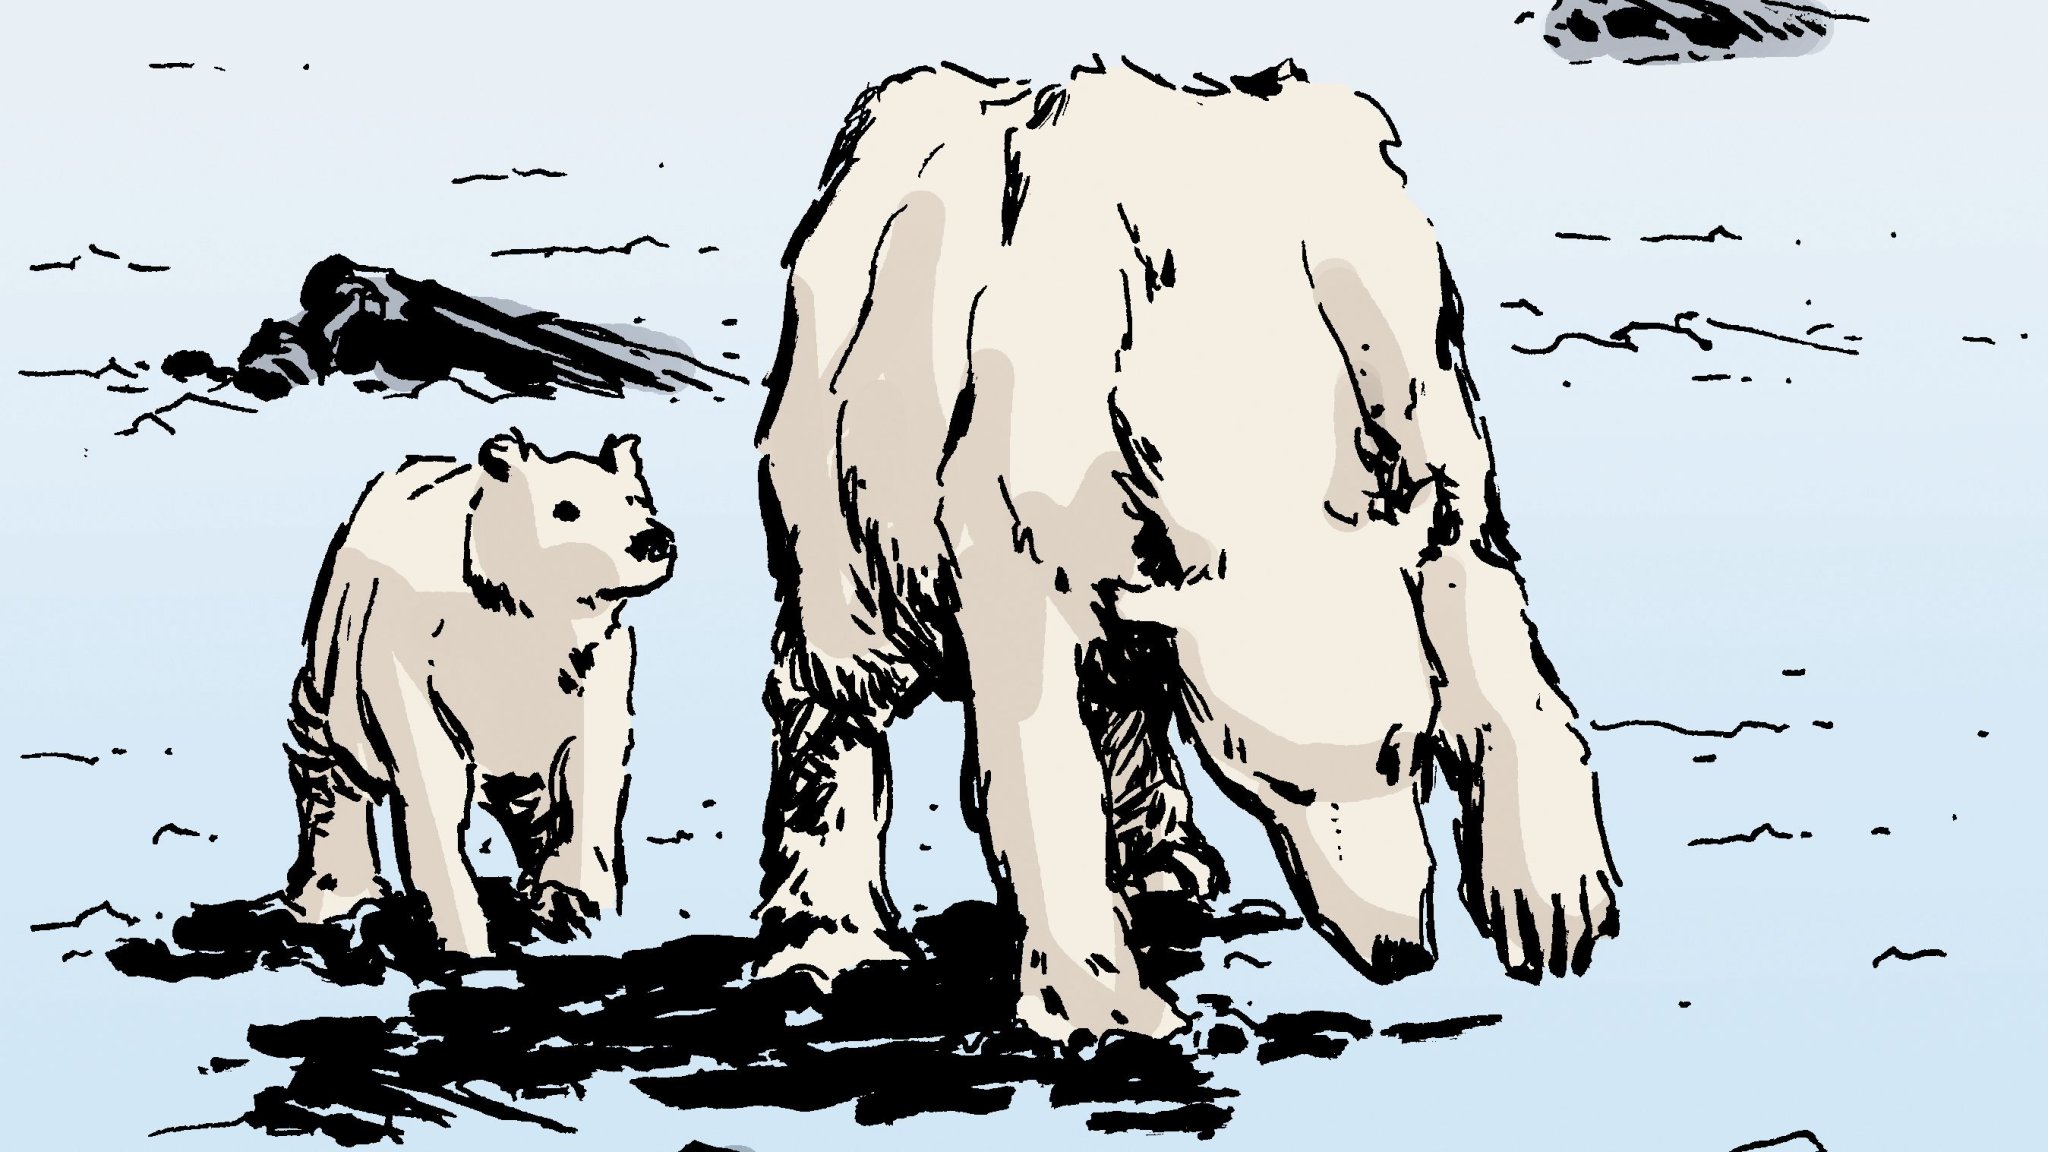 Vol. 3: The polar bears on dangerously thin ice